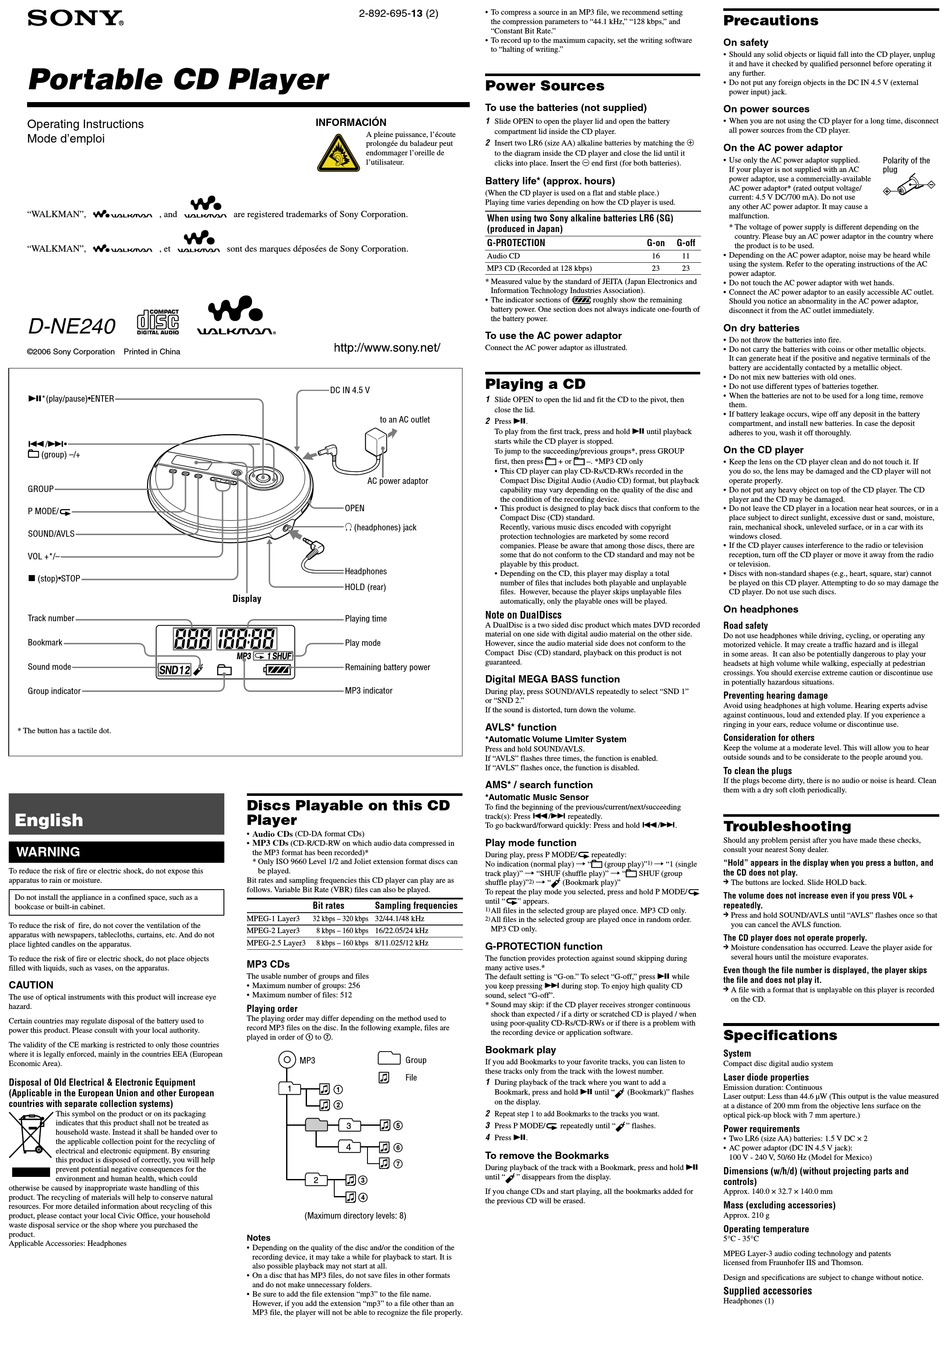 SONY WALKMAN D-NE240 OPERATING INSTRUCTIONS Pdf Download | ManualsLib